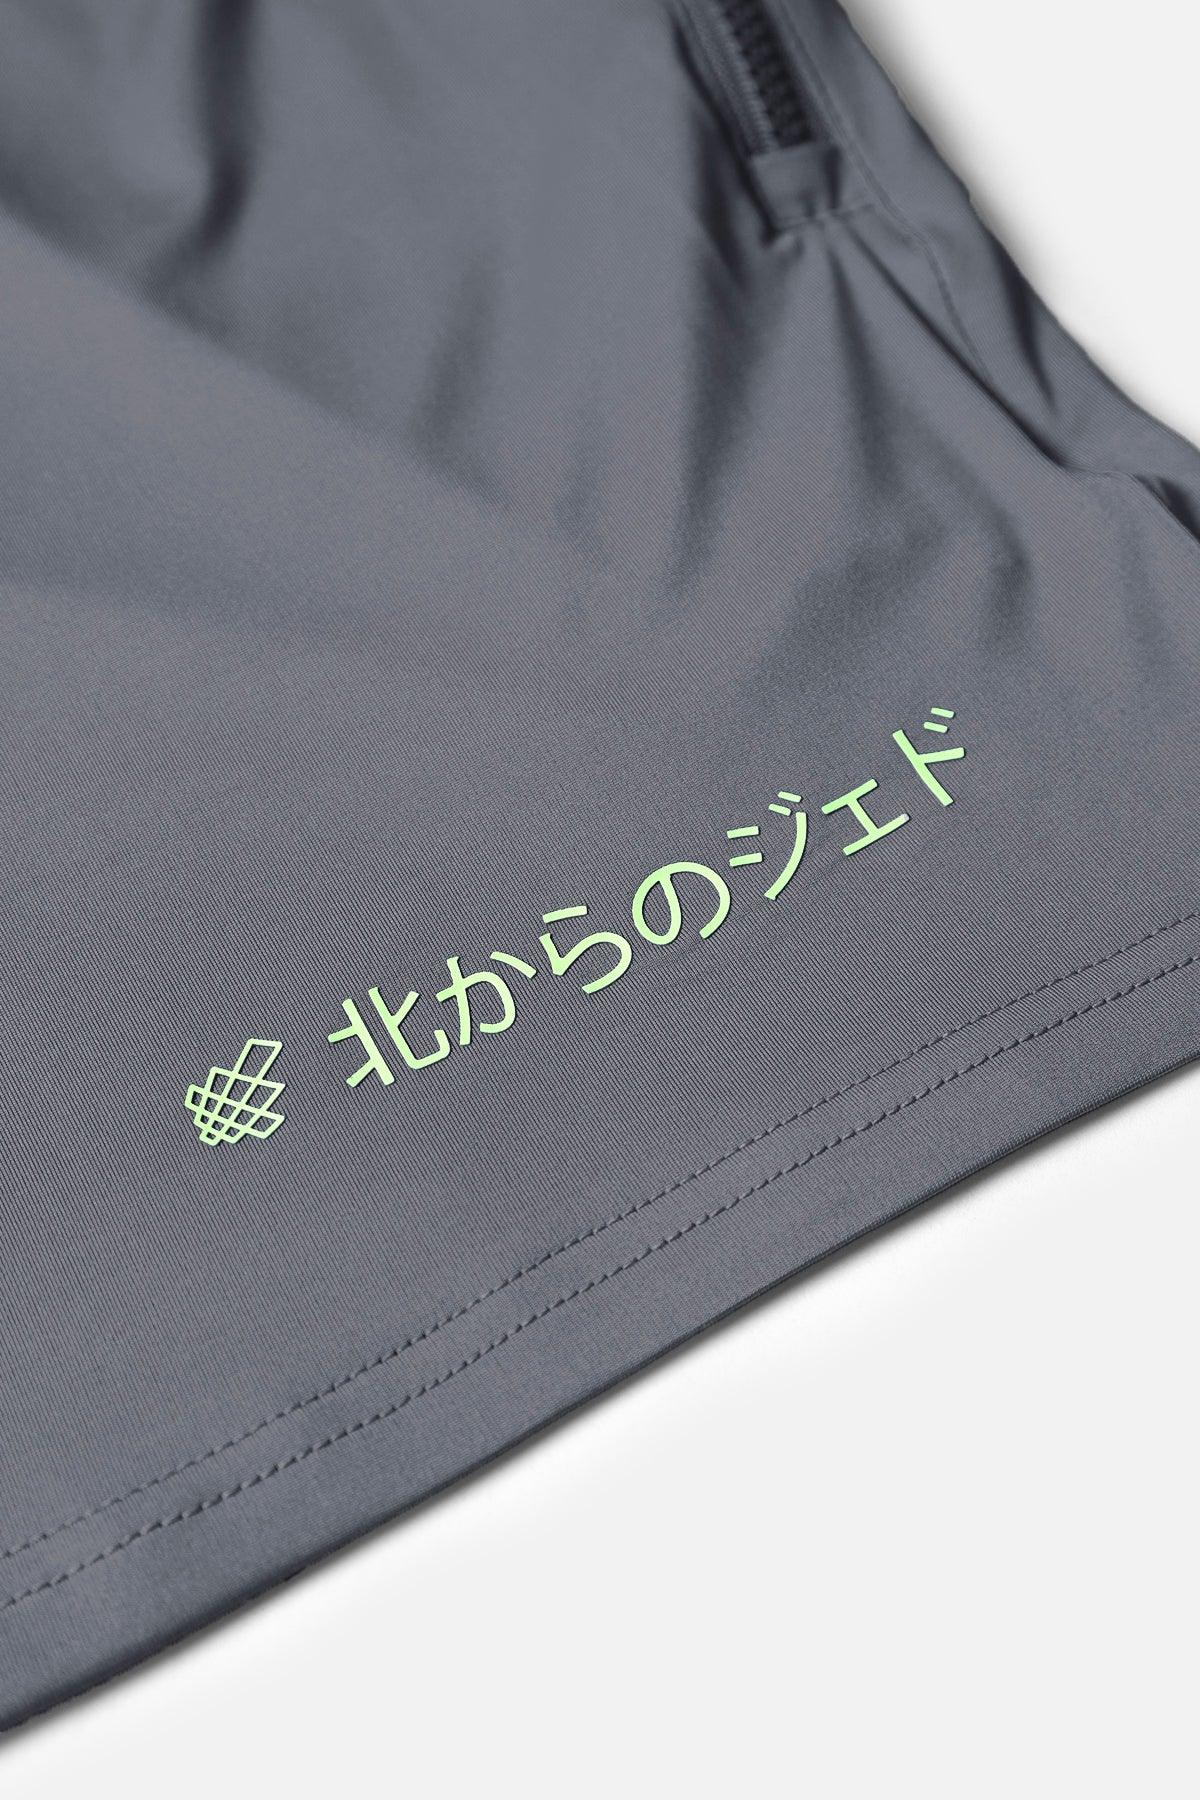 Agile Bodybuilding 4'' Shorts w Zipper Pockets - Japanese Gray - Jed North